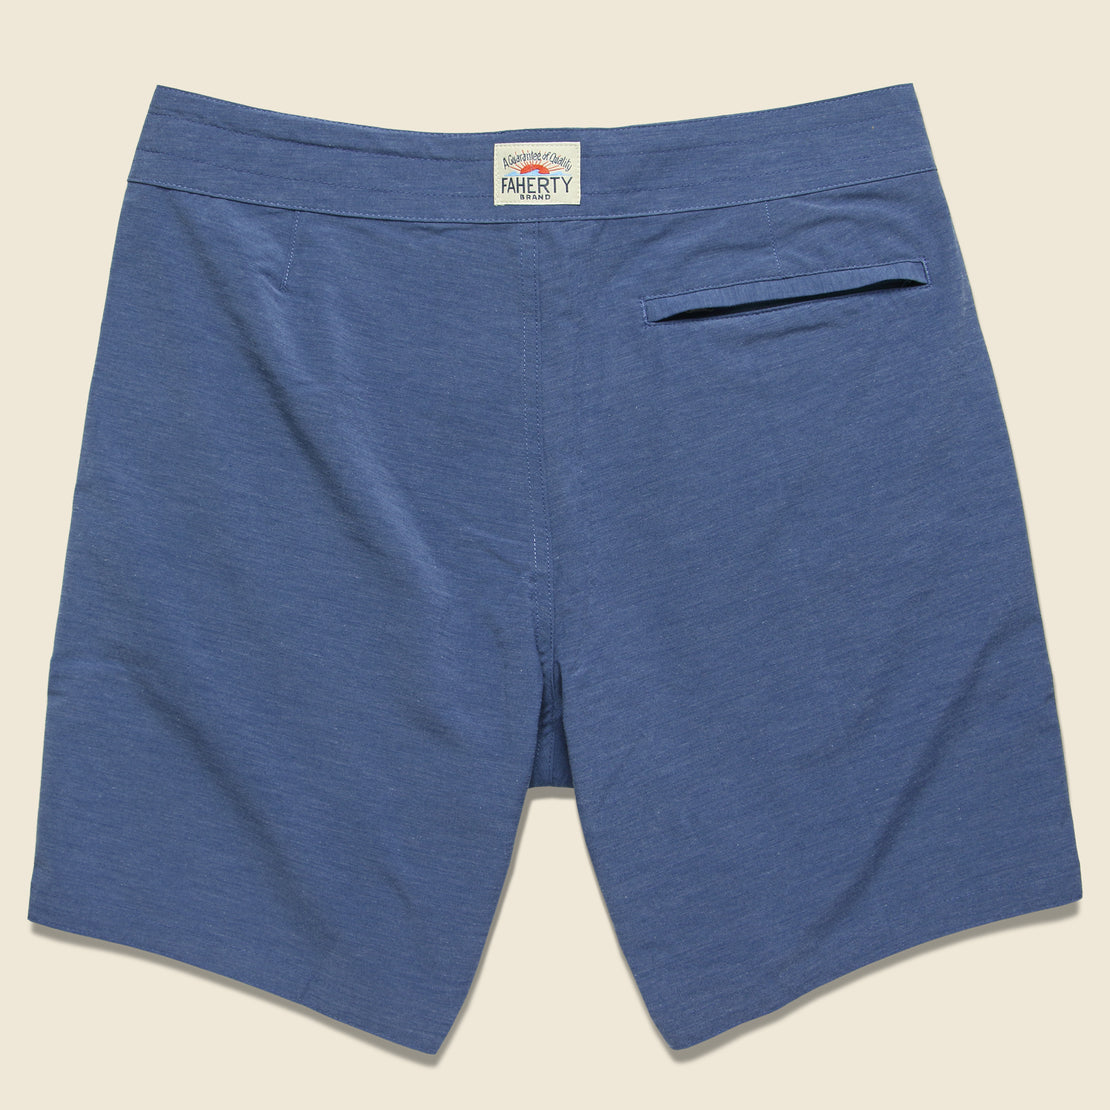 Retro Surf Stripe Boardshort - Blue/Red/White - Faherty - STAG Provisions - Shorts - Swim